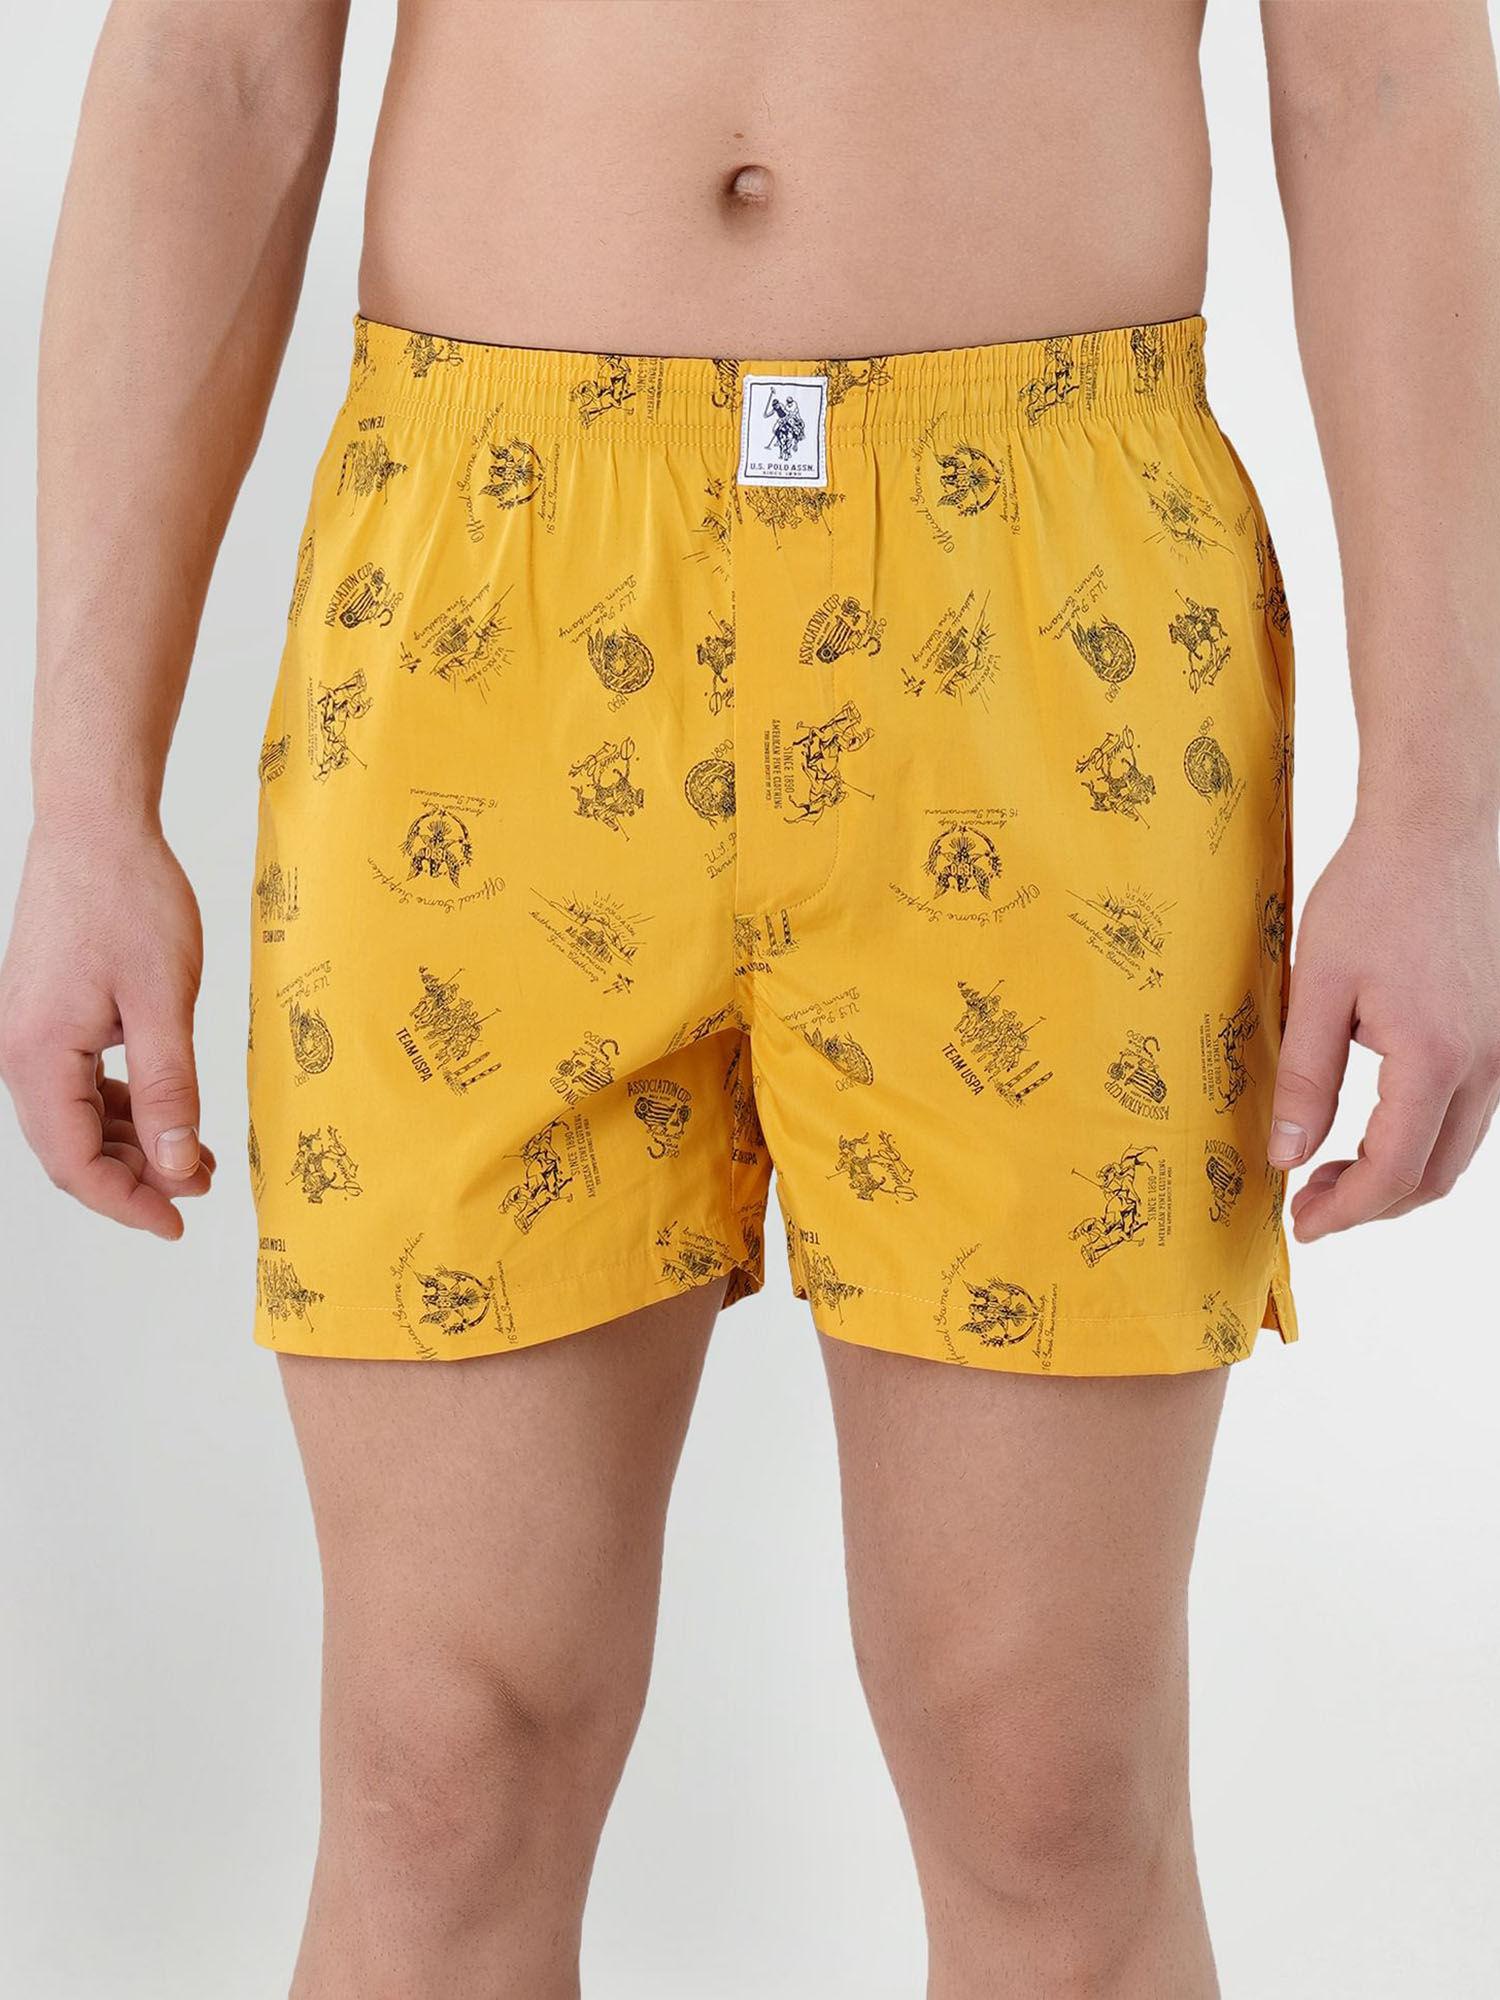 graphic print cotton i657 boxers yellow